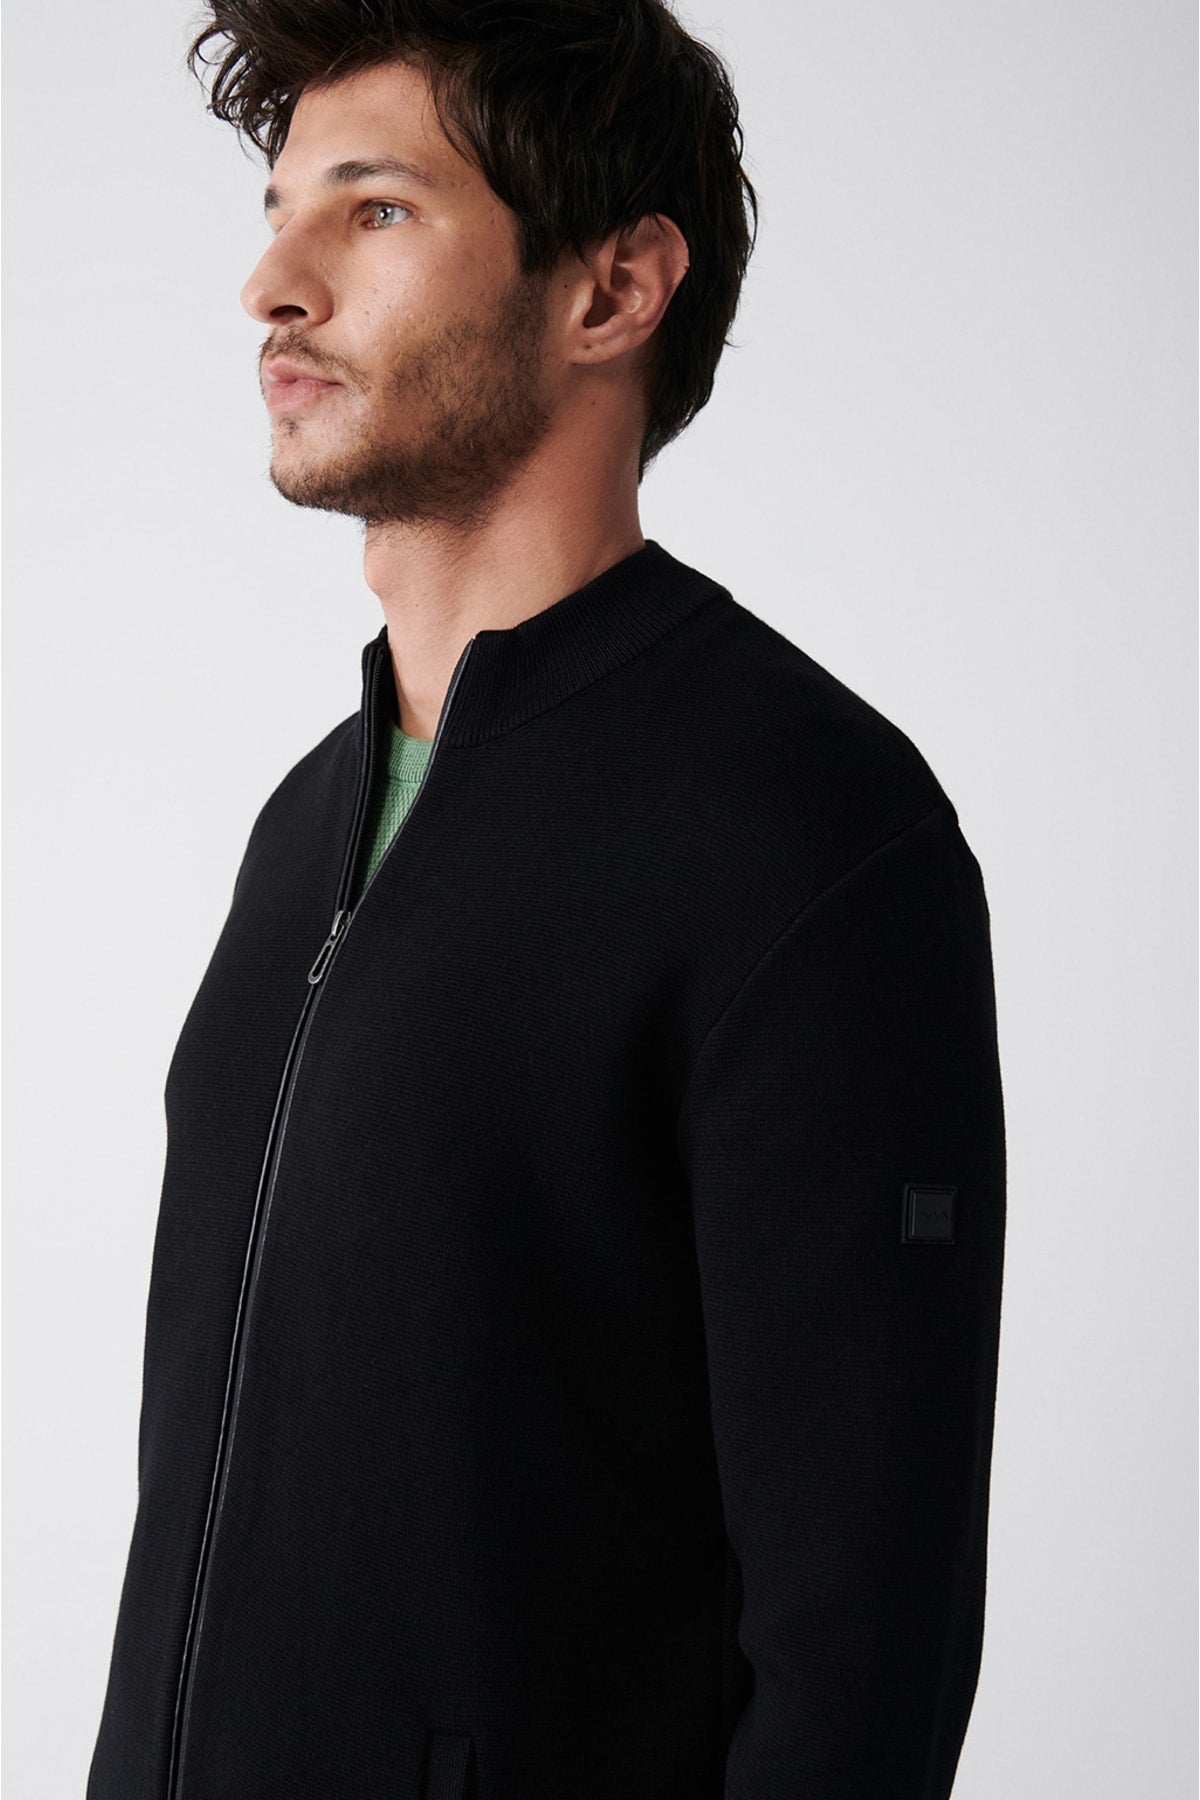 Men's black upright collar zipper knitwear cardigan A31y5101